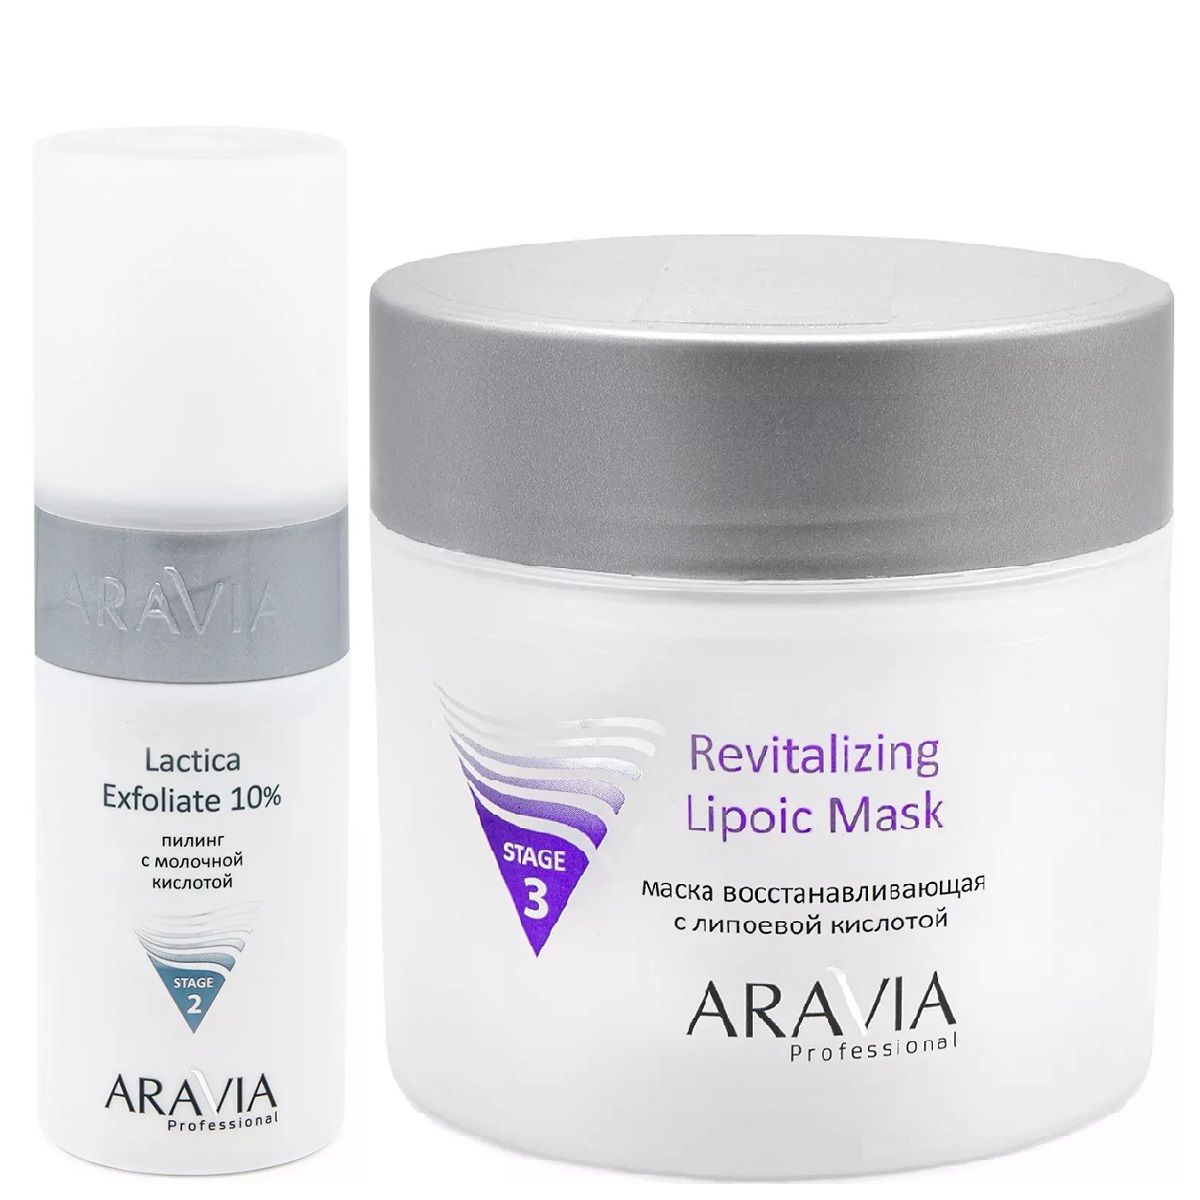 Aravia Professional Набор Очищение и восстановление: маска, 300 мл + пилинг, 150 мл (Aravia Professional, Уход за лицом)